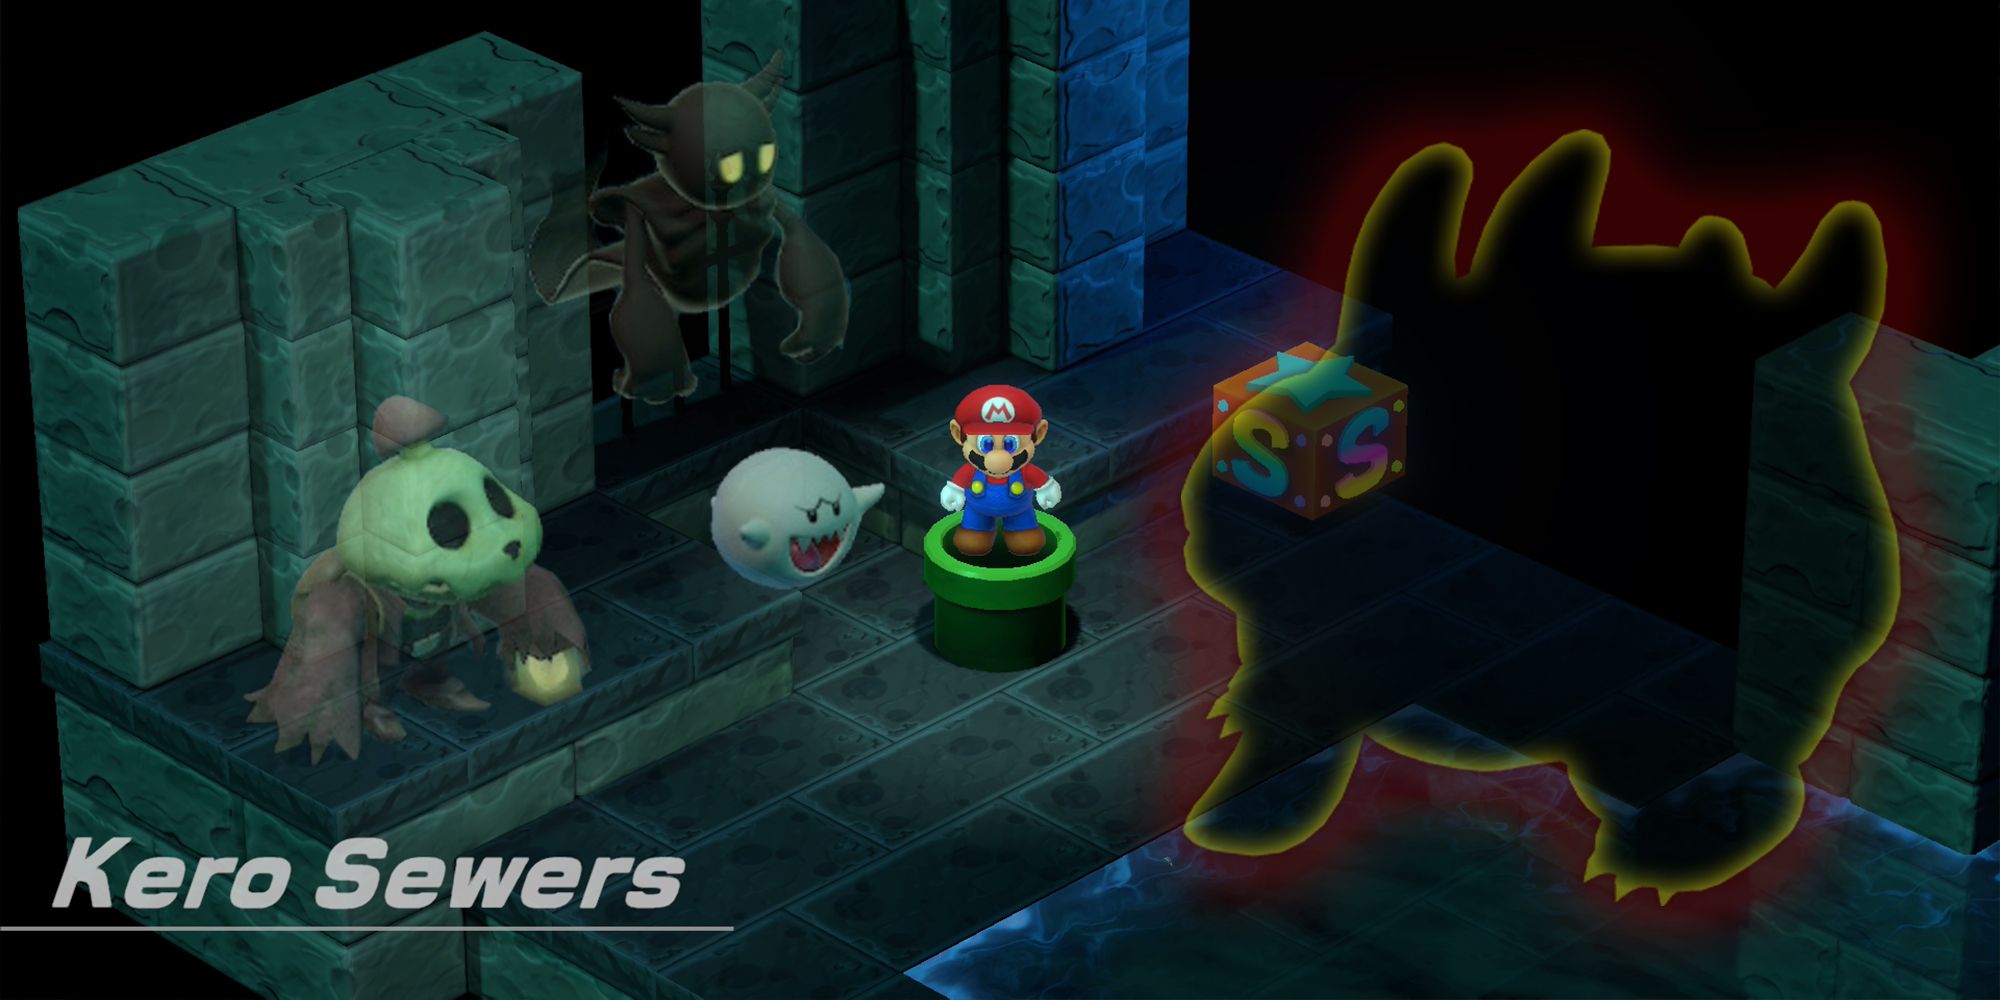 Super Mario RPG Kero Sewers